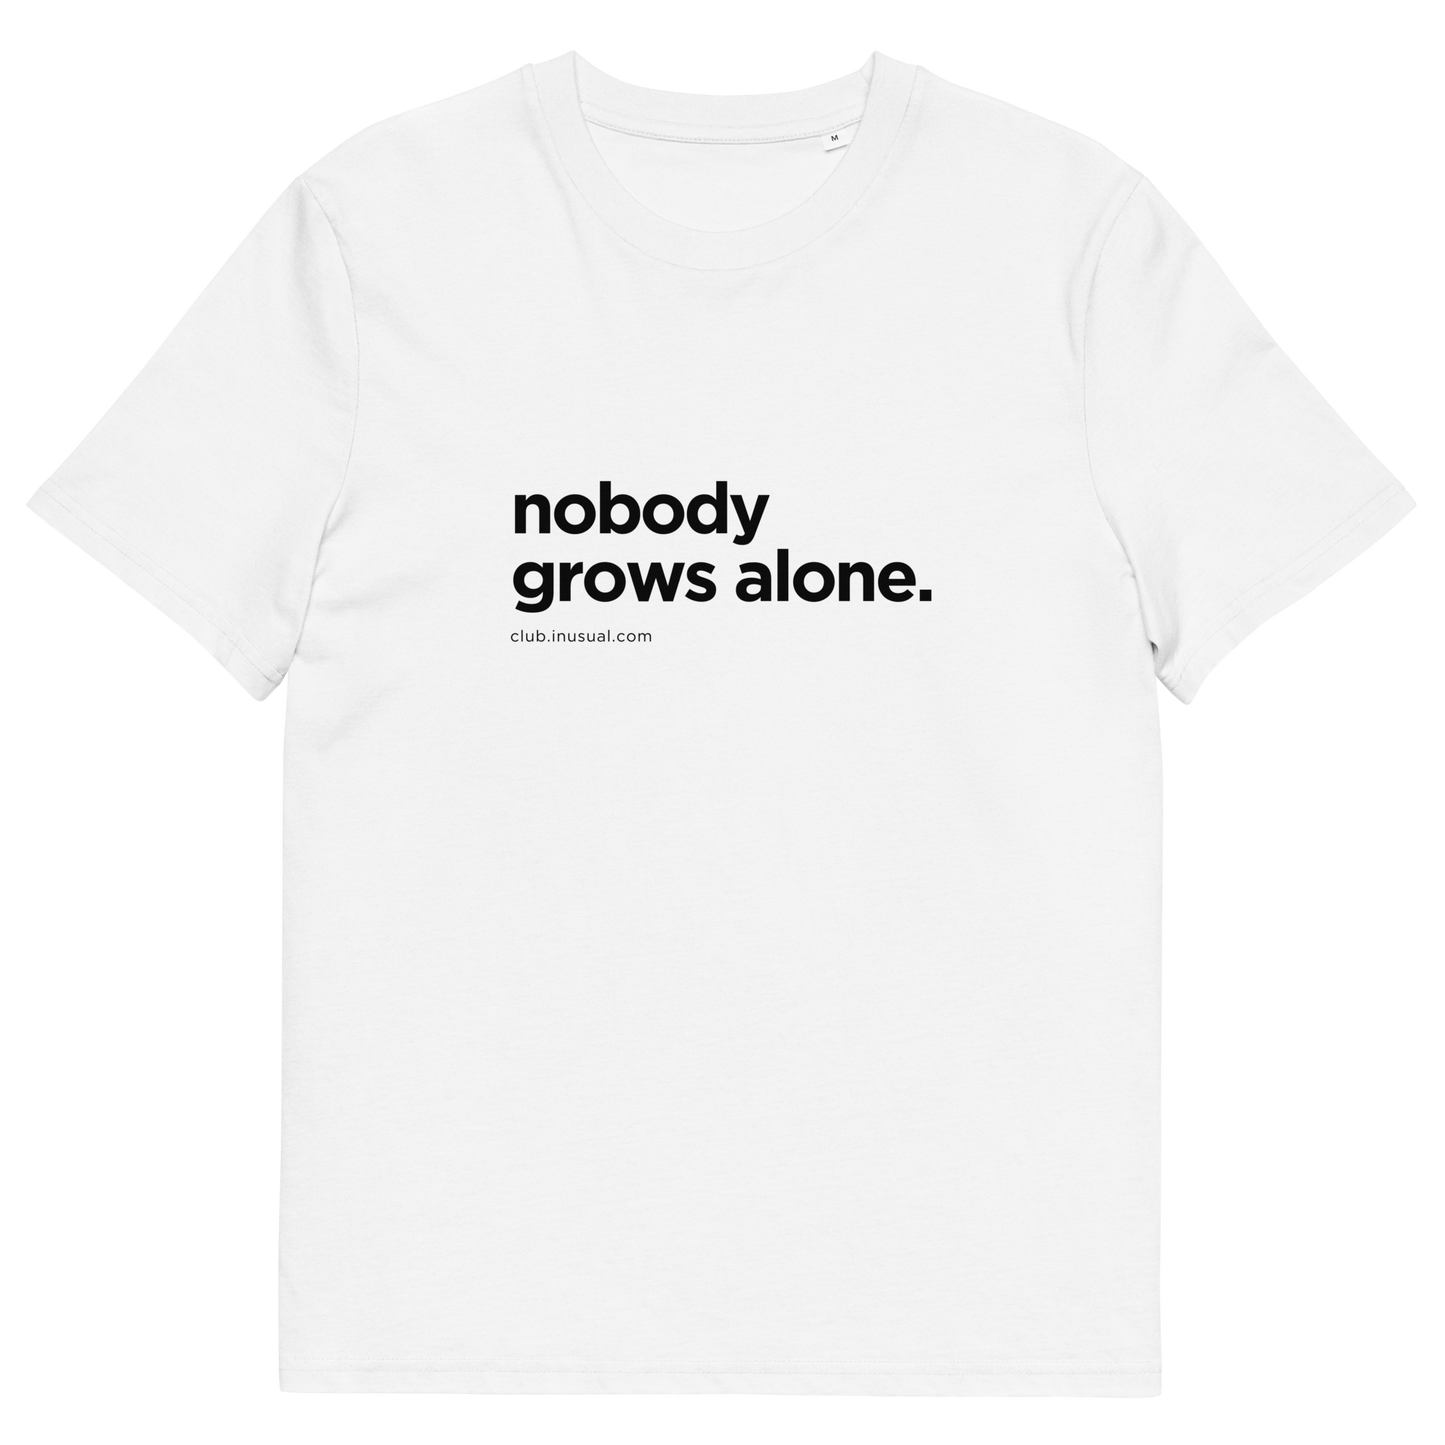 Camiseta Nobody grows alone. Blanca